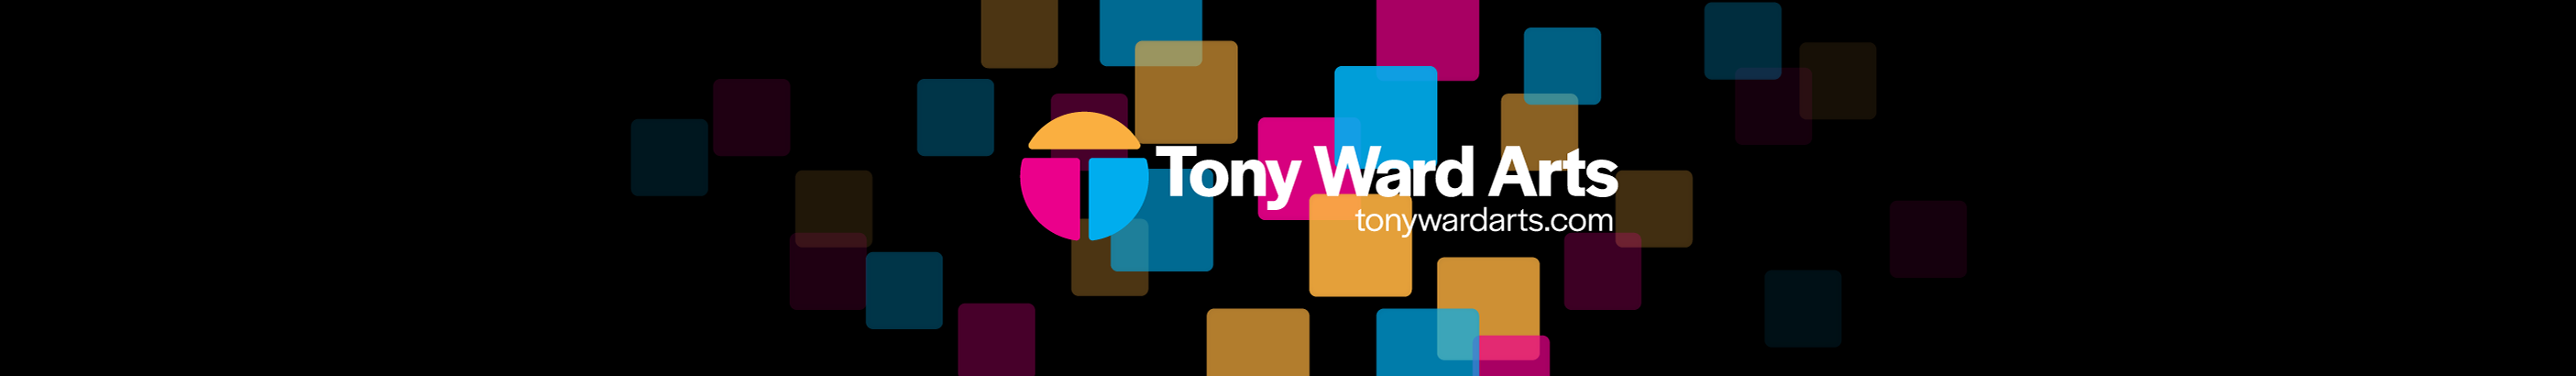 Tony Ward's profile banner